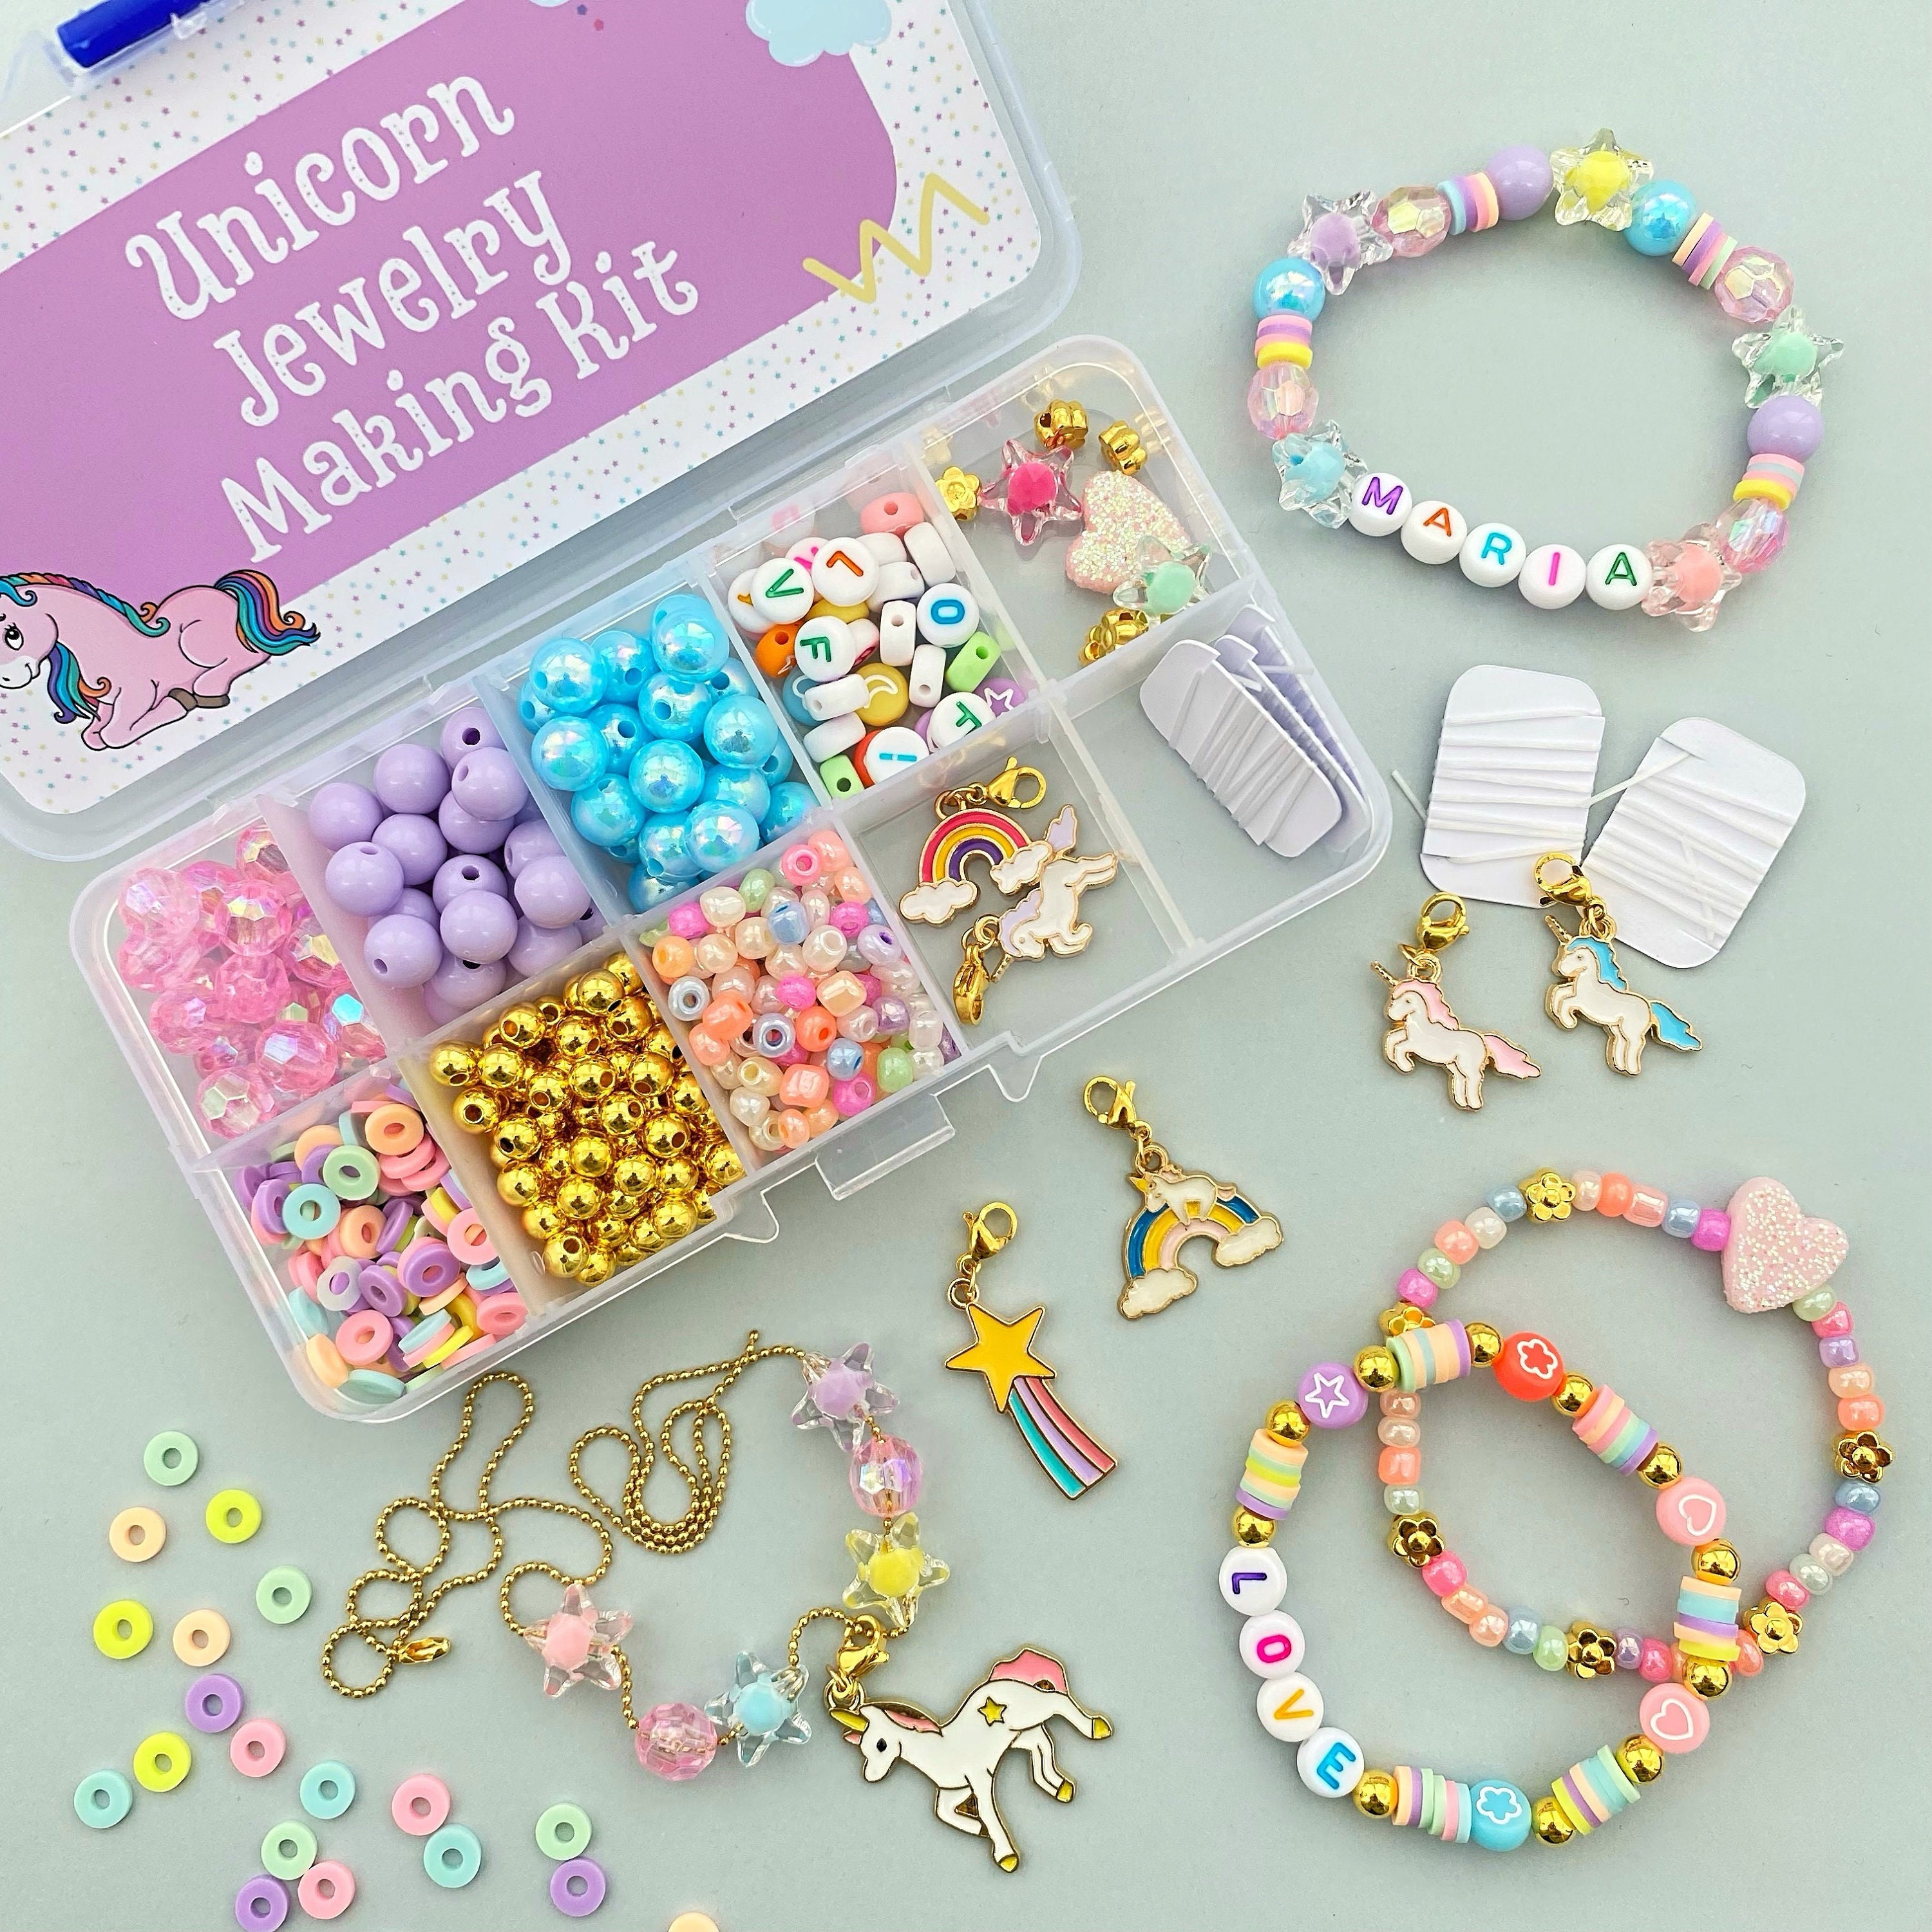 DraggmePartty Unicorn Girl Gift Jewelry Making Kit - Kids Toys Art